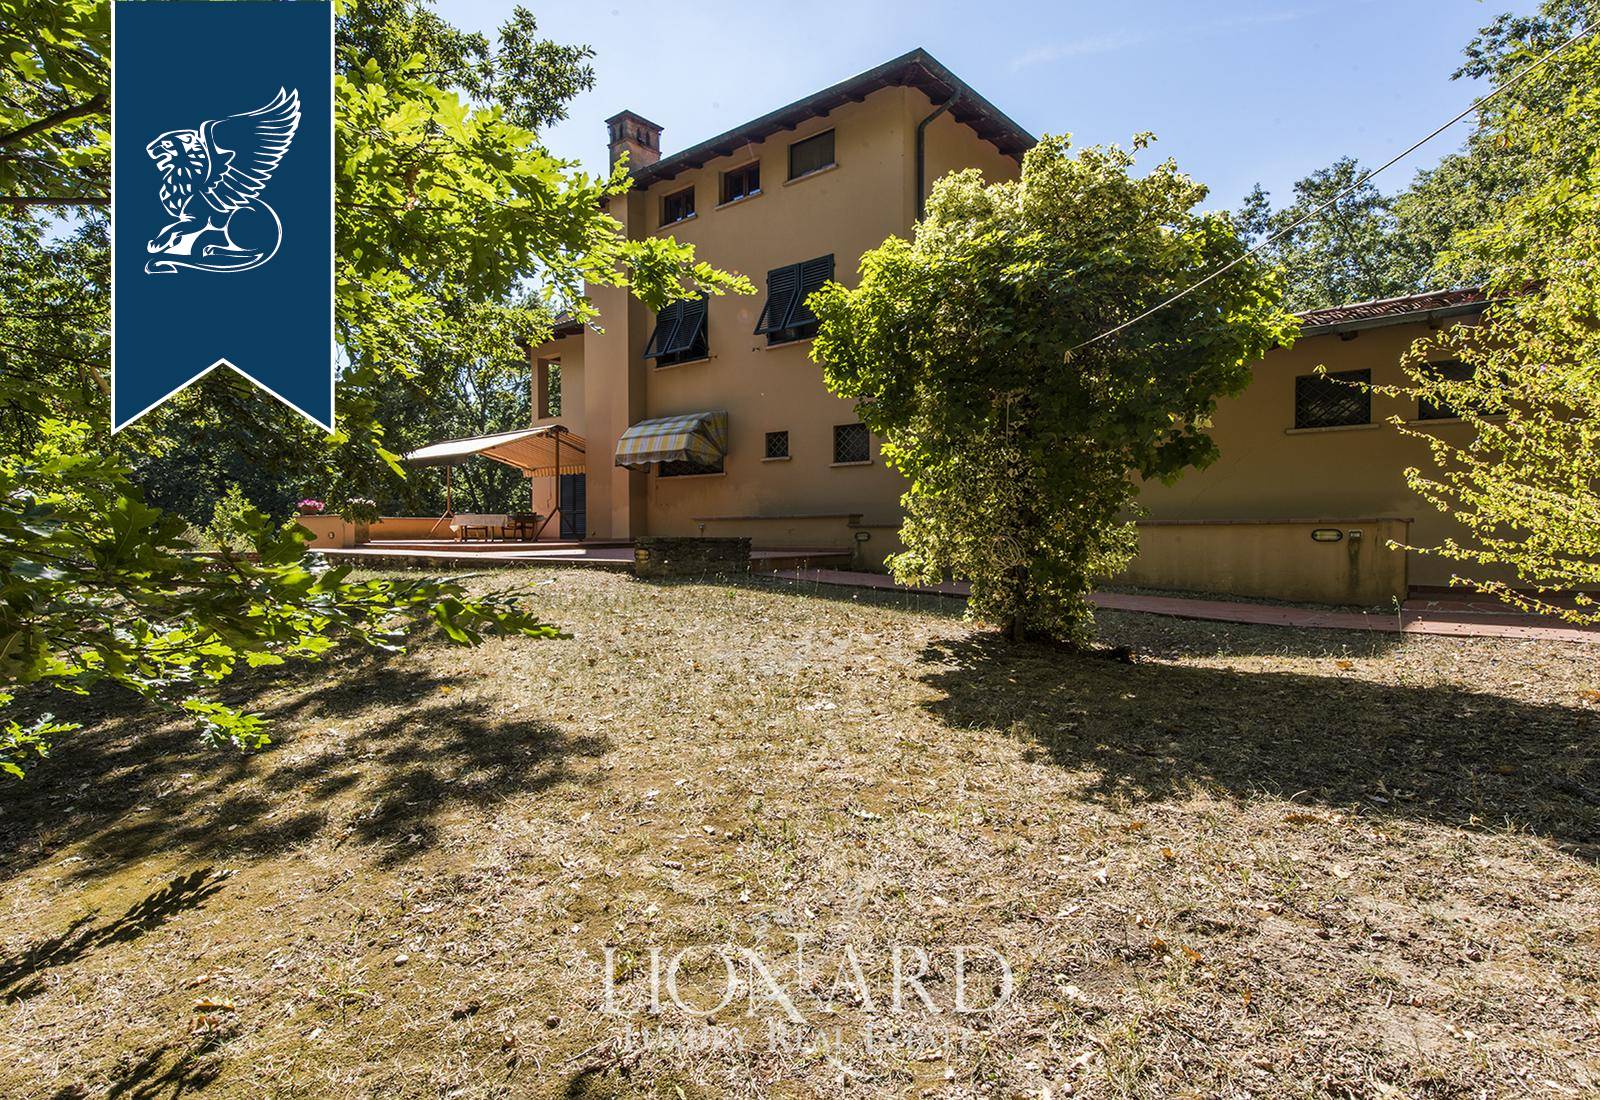 Villa in Vendita a Lucca: 0 locali, 500 mq - Foto 1